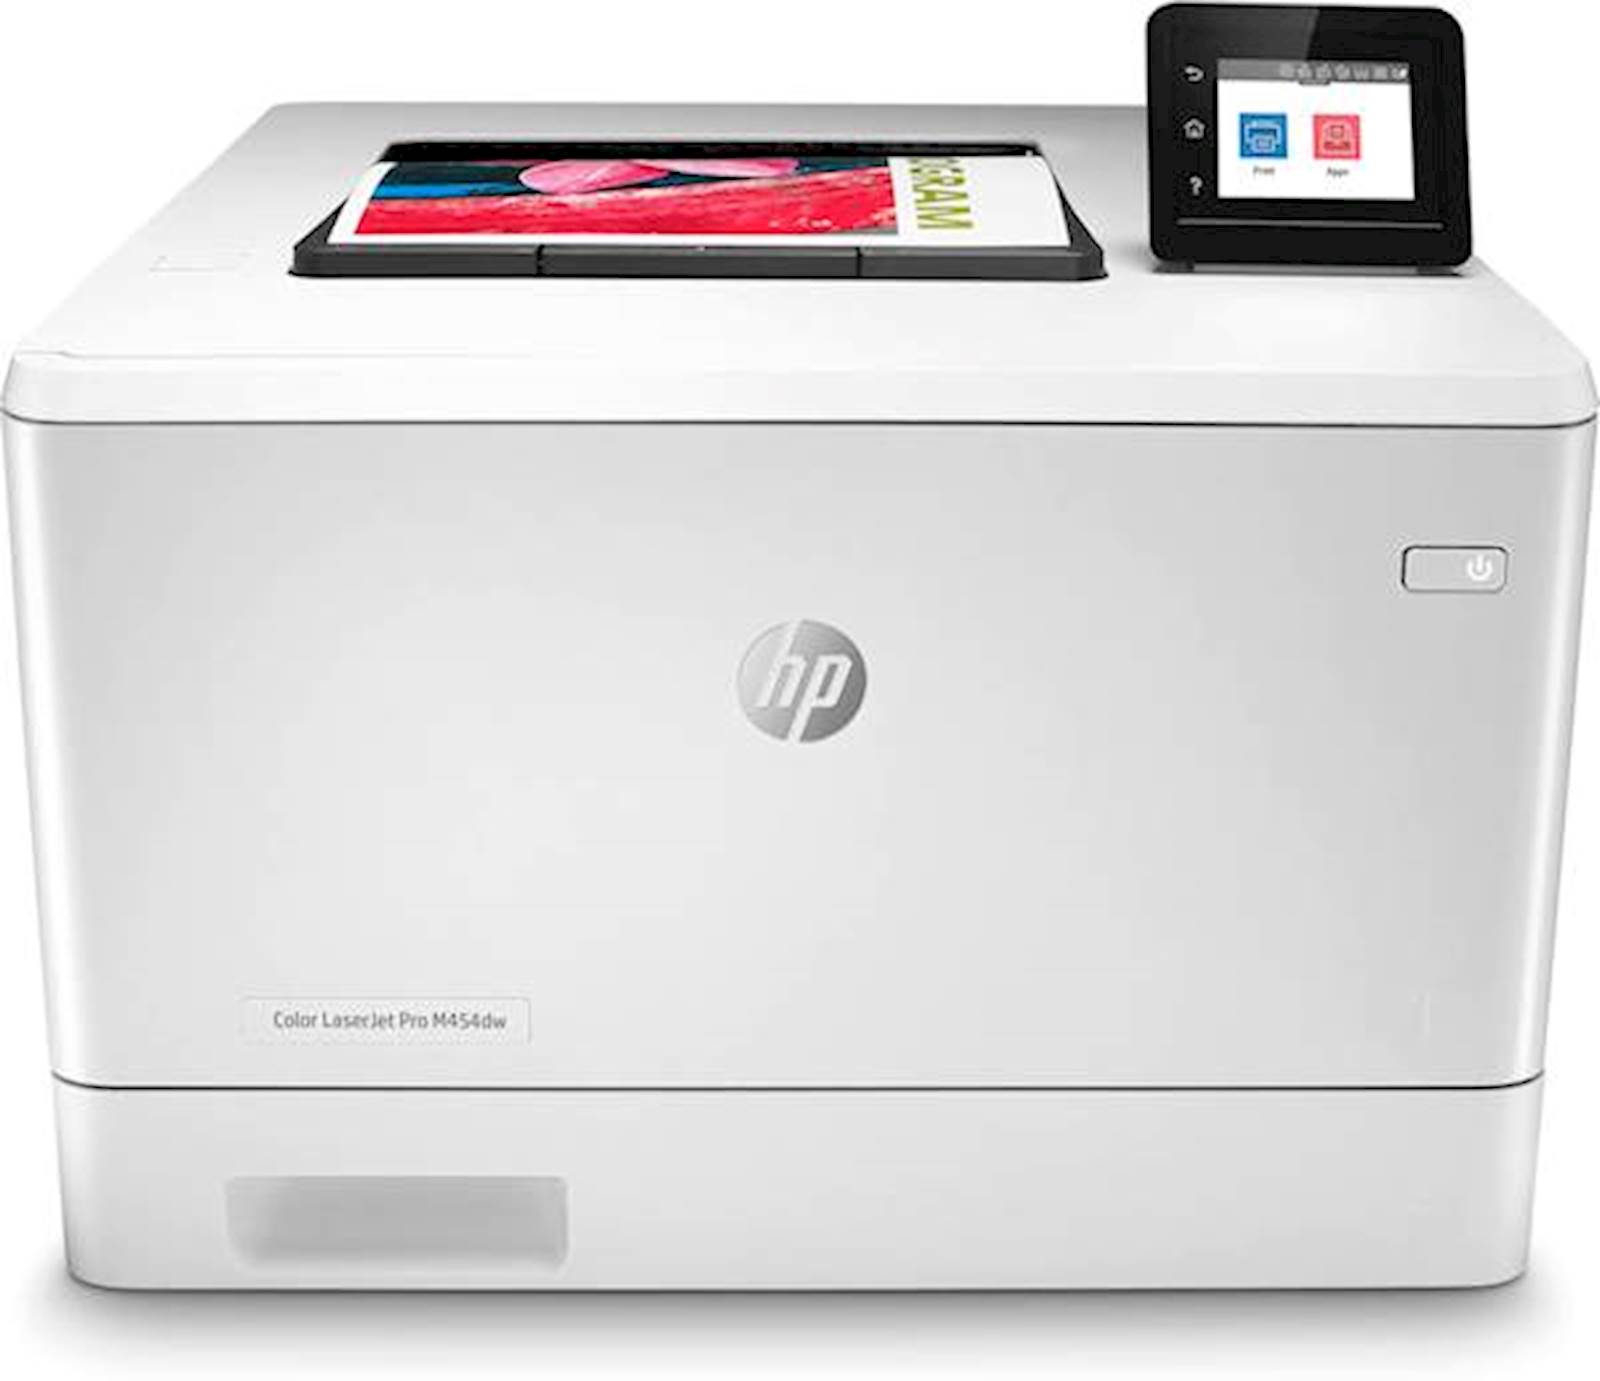 Printer HP Color LaserJet Pro